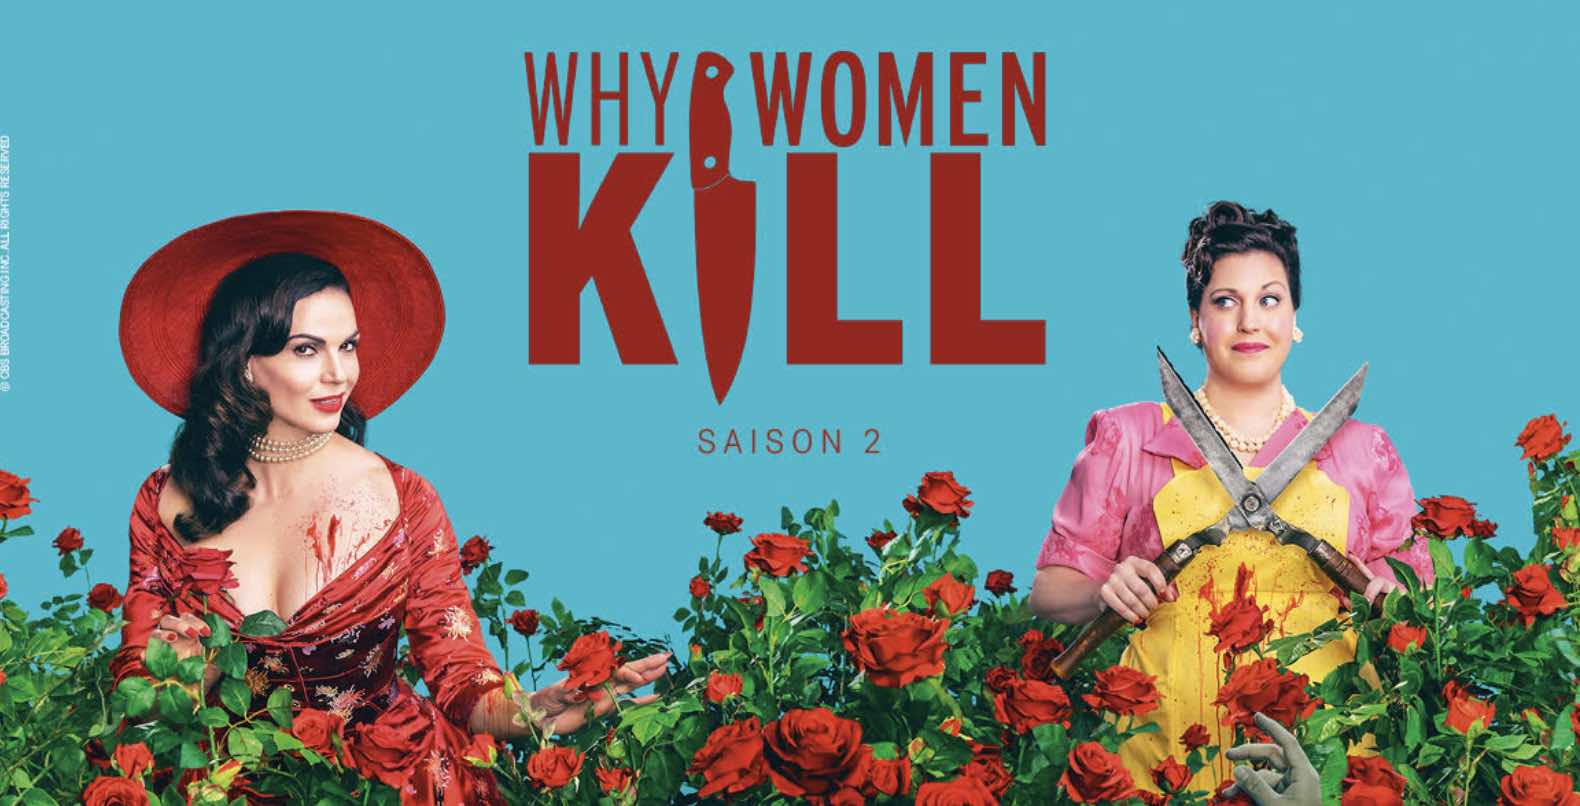 Why women kill - saison 2 - M6 -